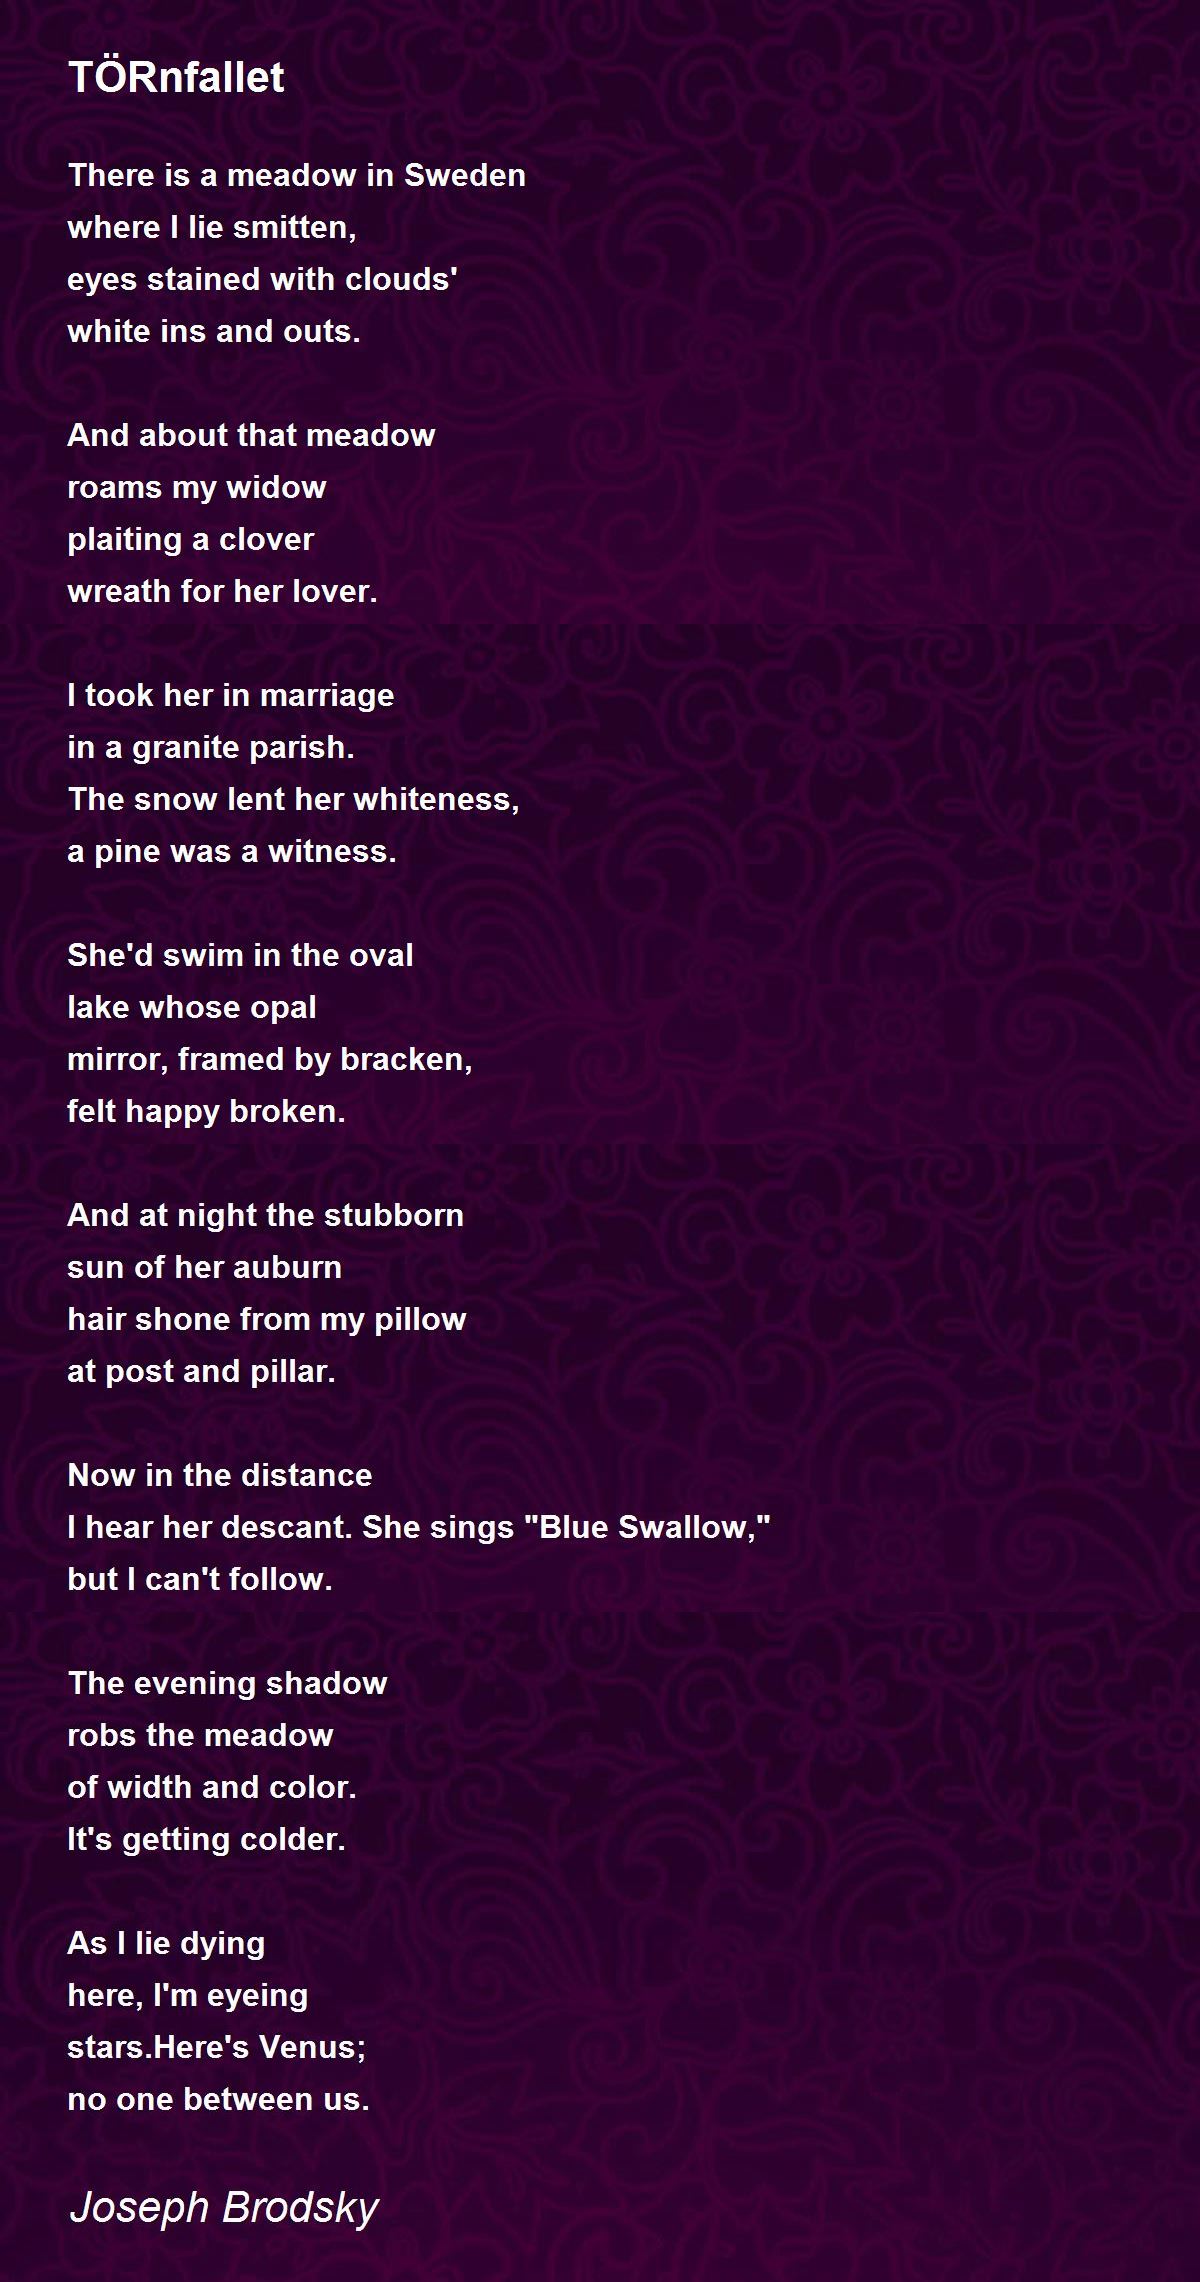 TÖRnfallet Poem by Joseph Brodsky - Poem Hunter